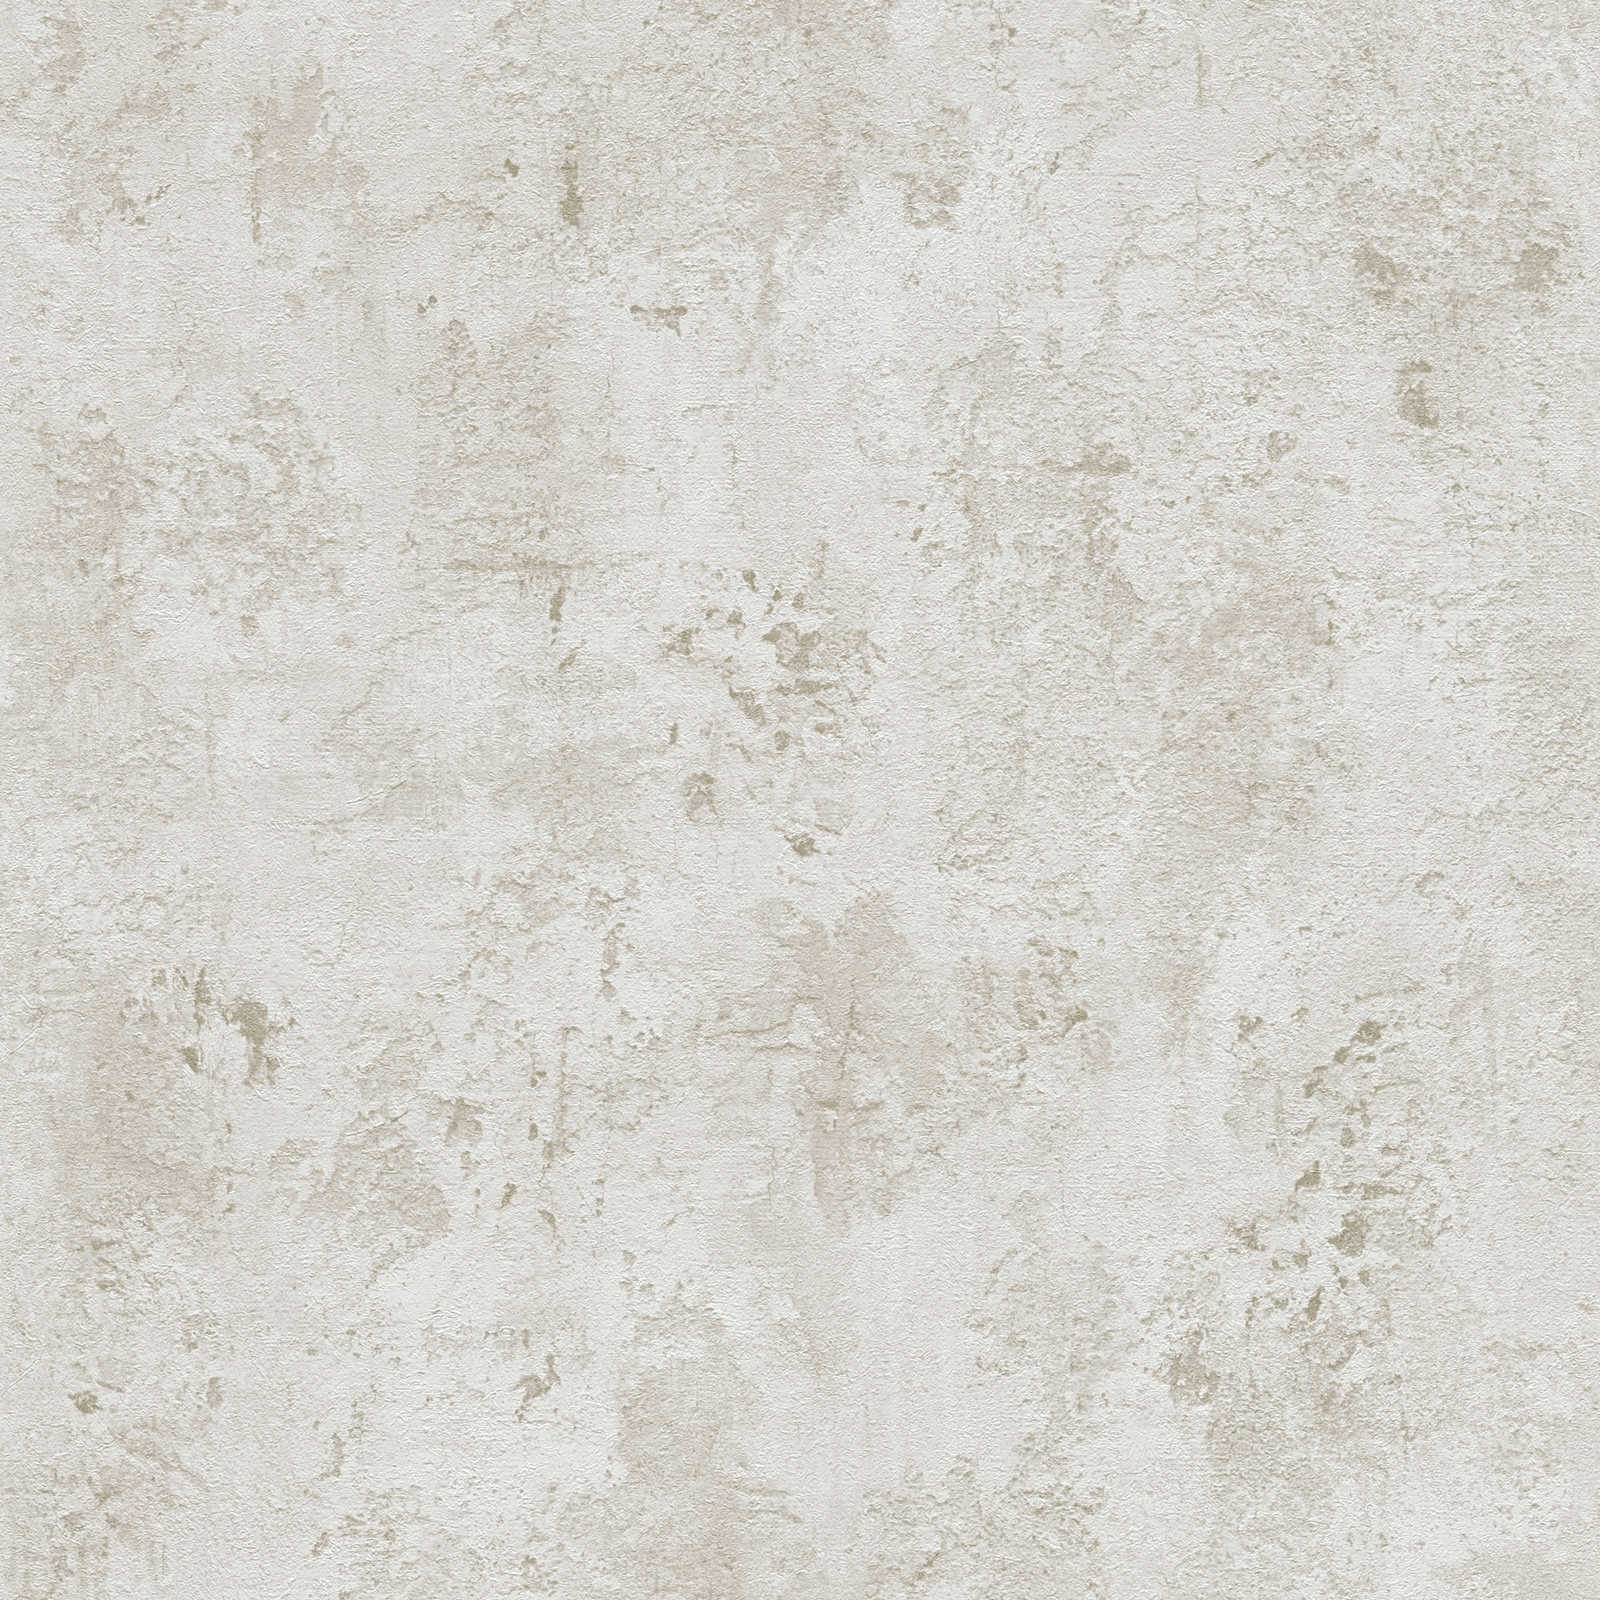 The Bos - Mediterranean Plaster industrial wallpaper AS Creation Roll Light Grey  388231